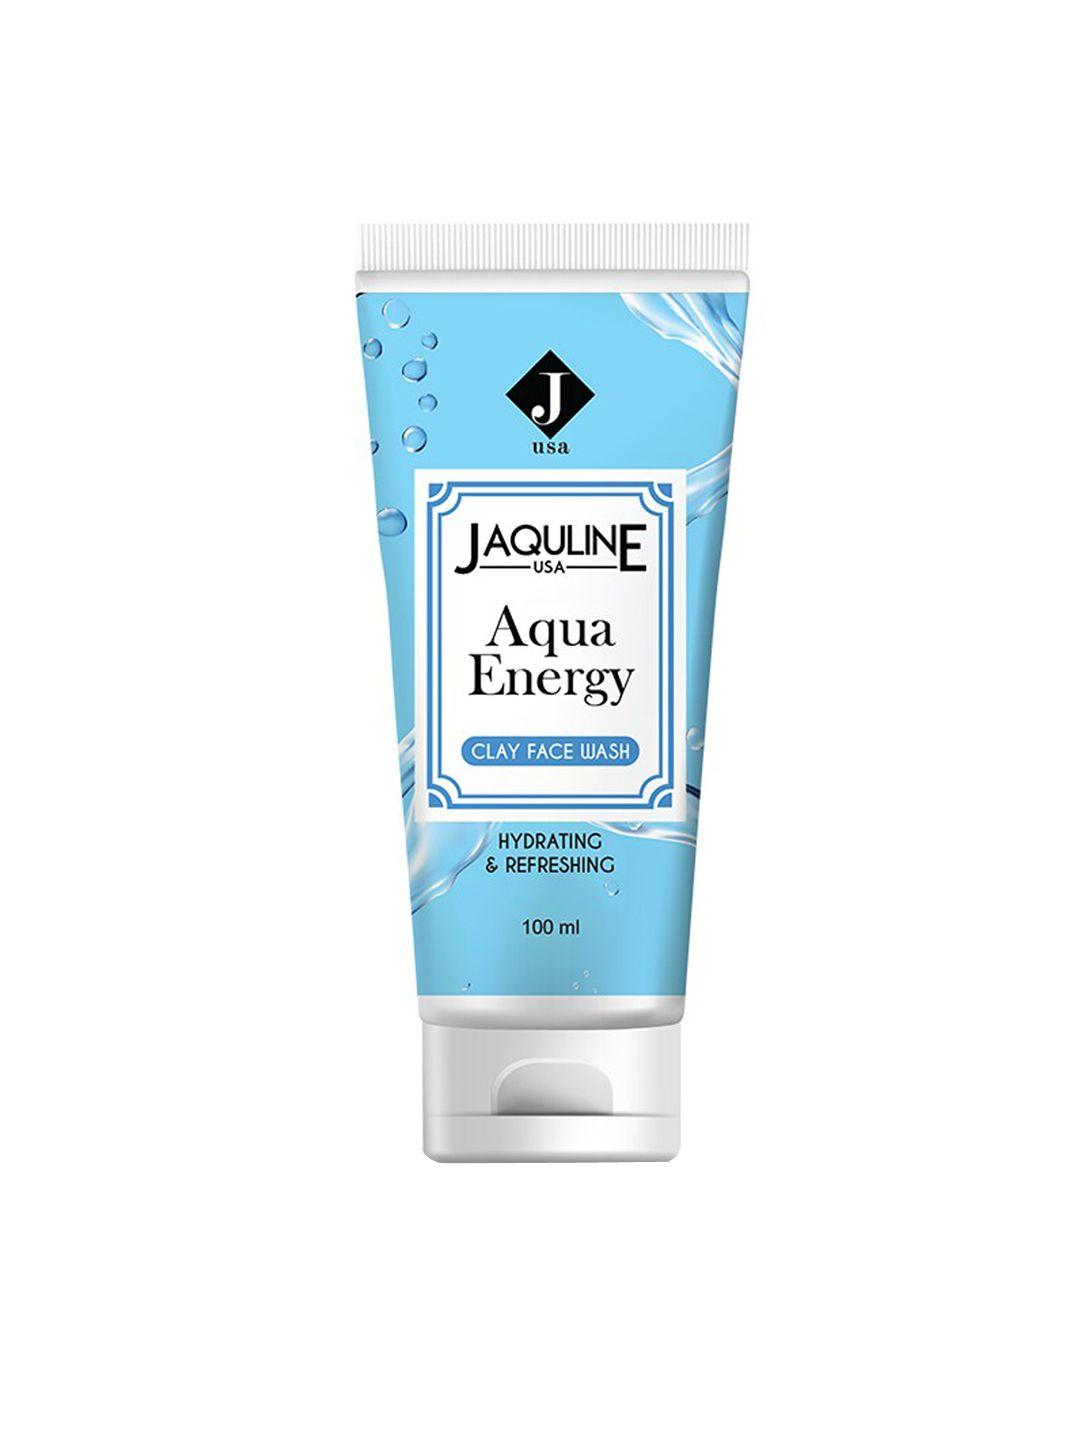 jaquline usa aqua energy clay face wash - 100 ml